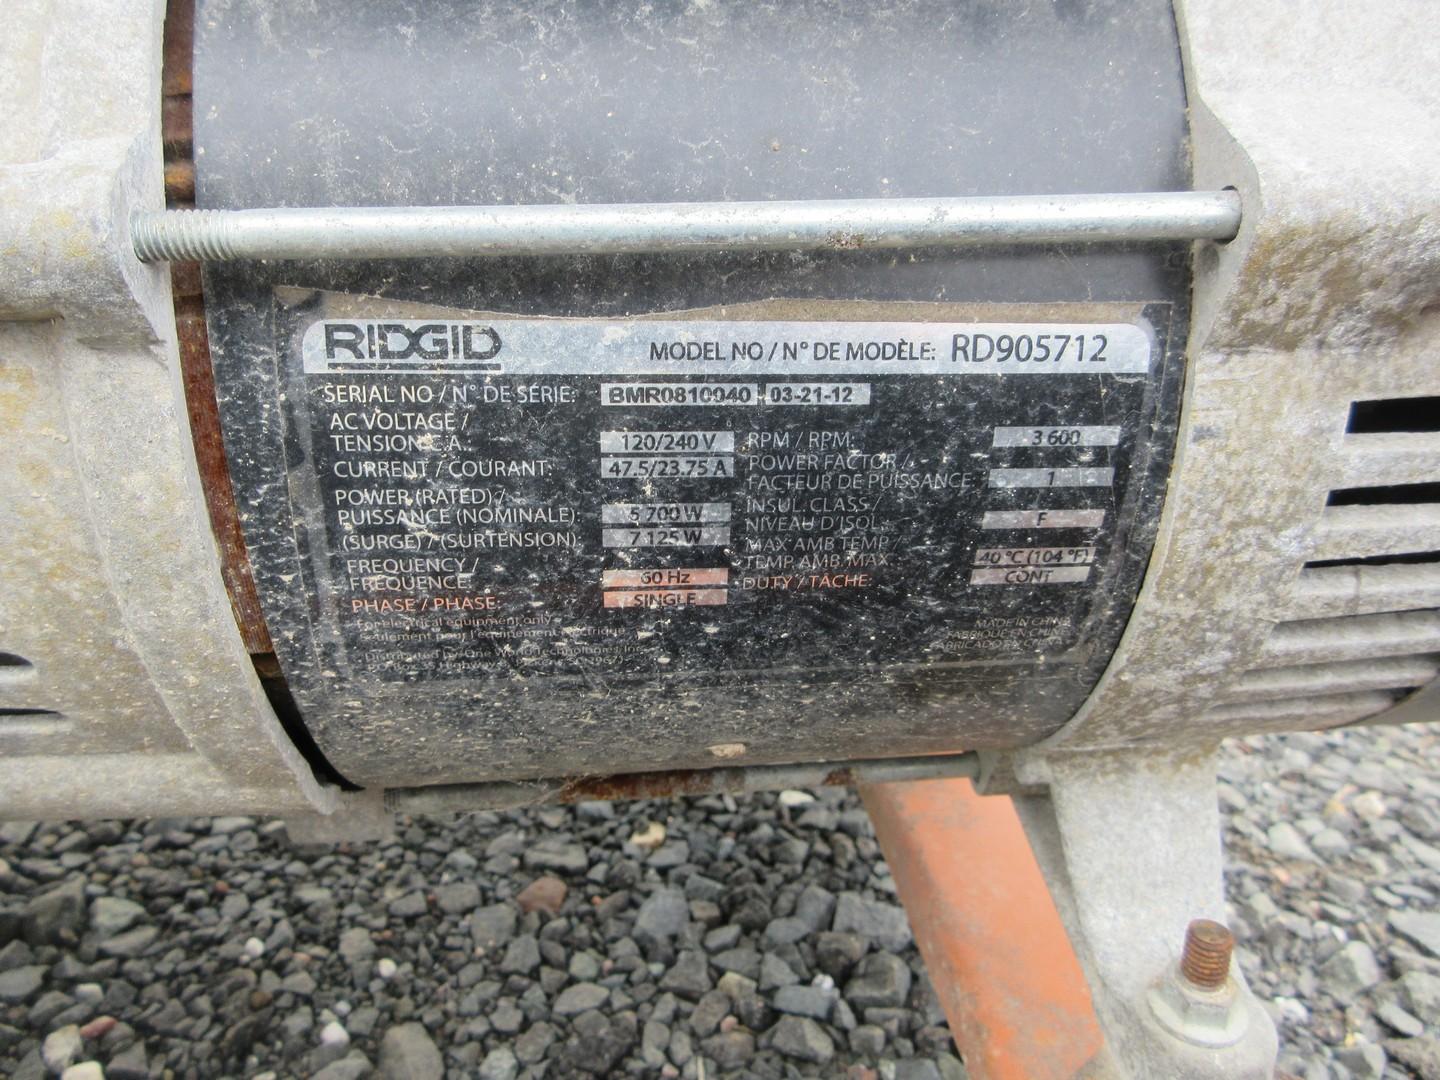 Ridgid 5700W Portable Generator